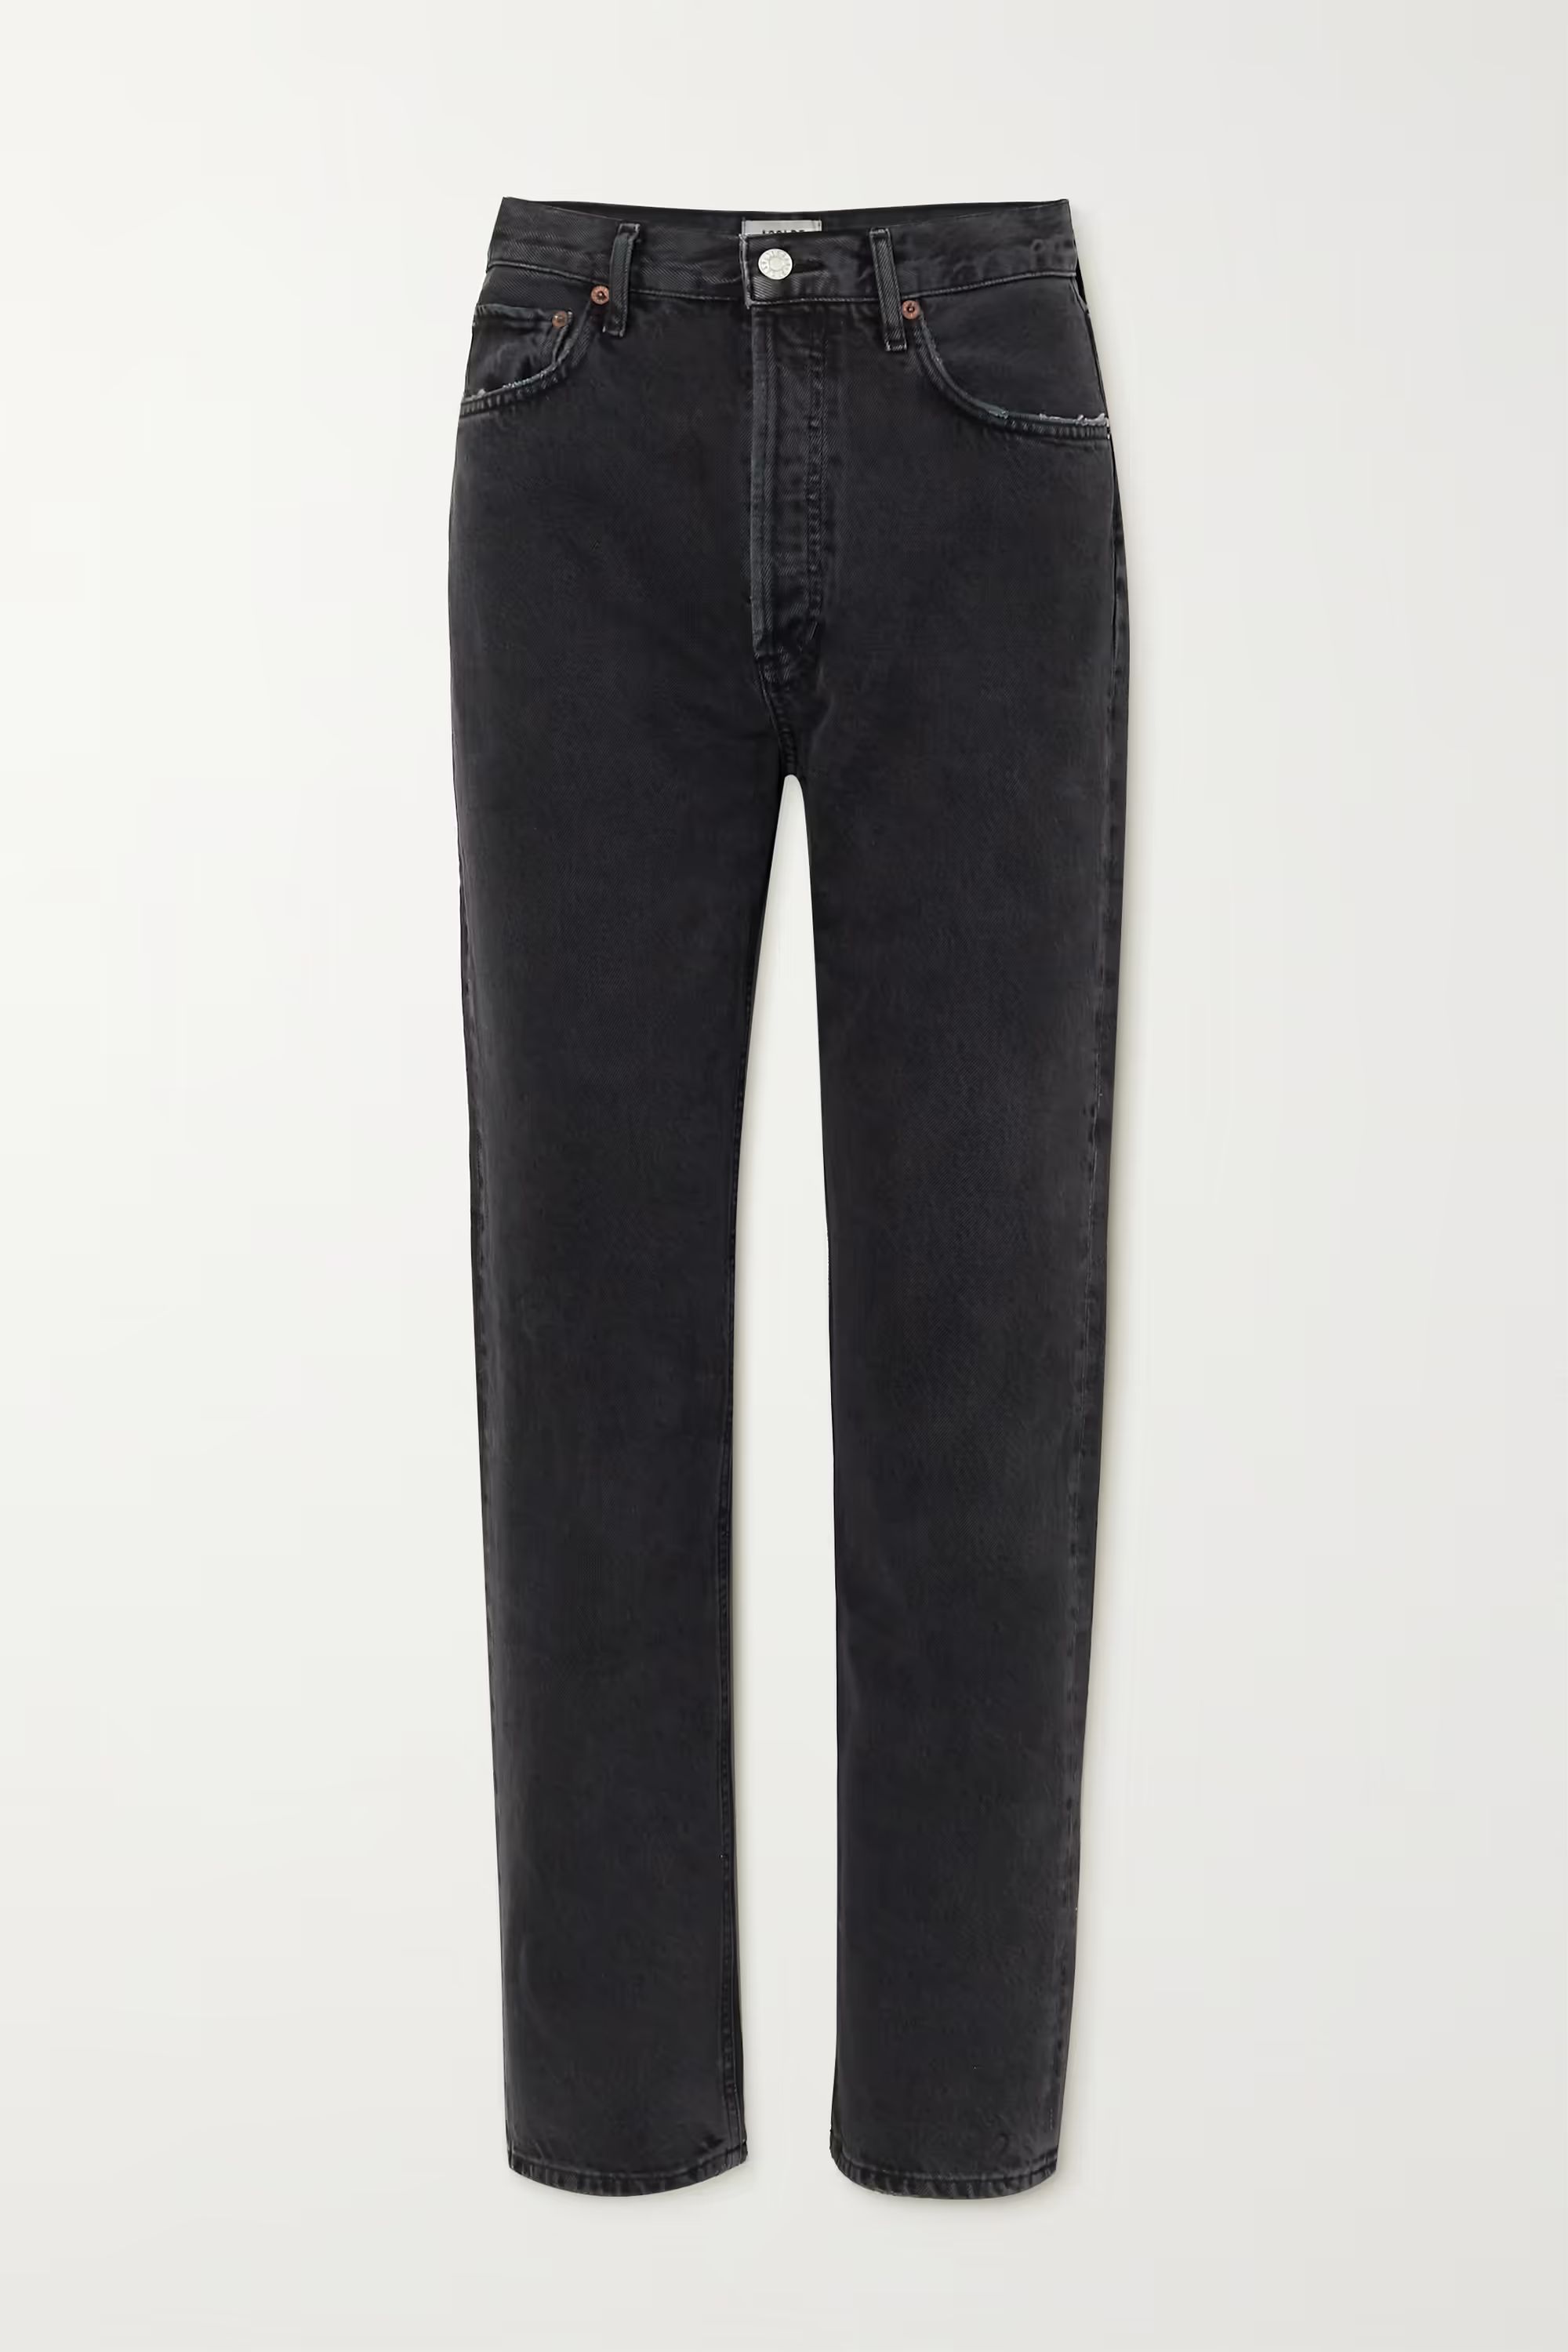 + NET SUSTAIN '90s high-rise straight-leg organic jeans | NET-A-PORTER (US)